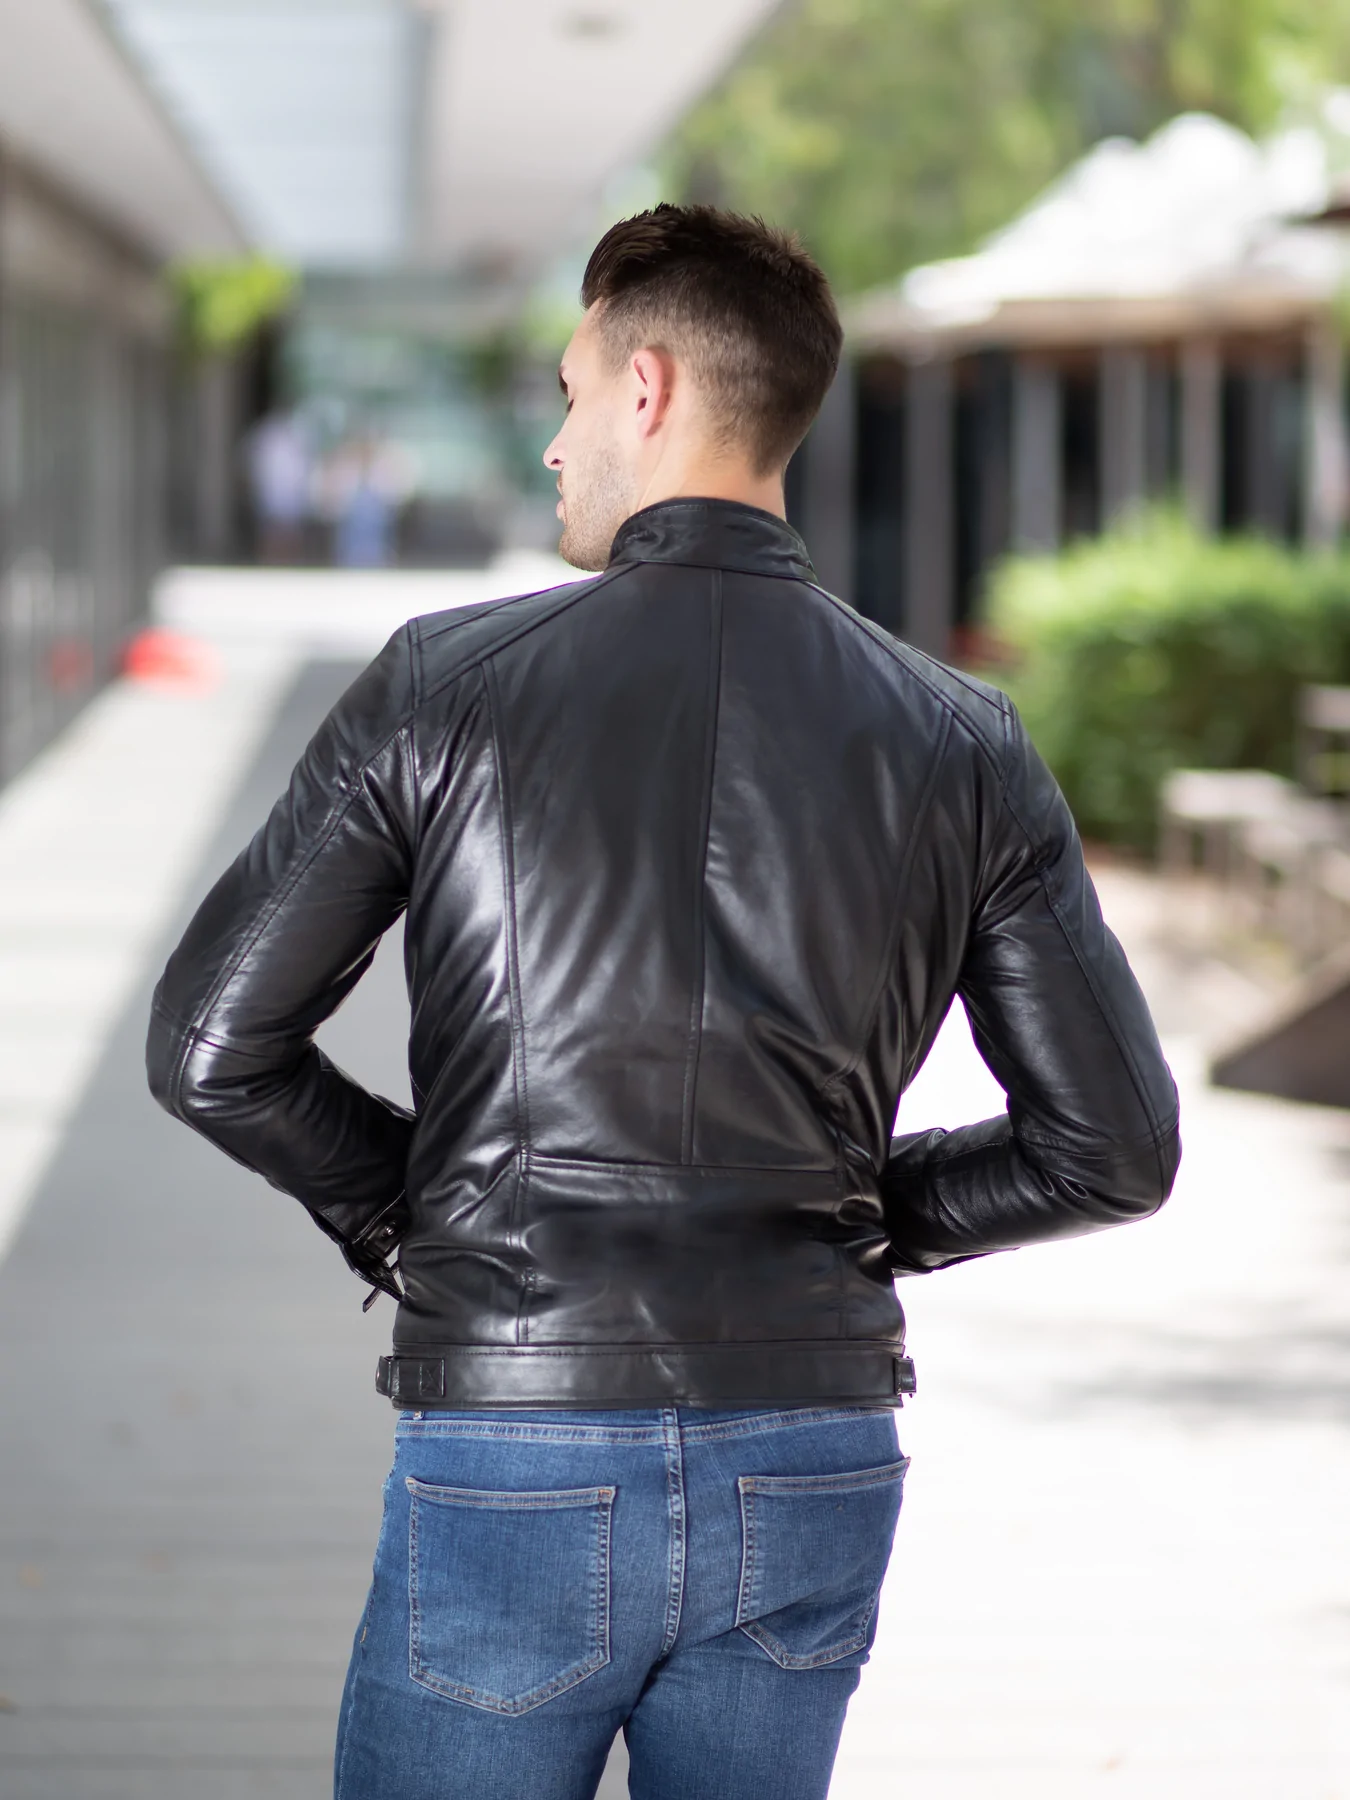 Iconic Black Leather kloset for Men